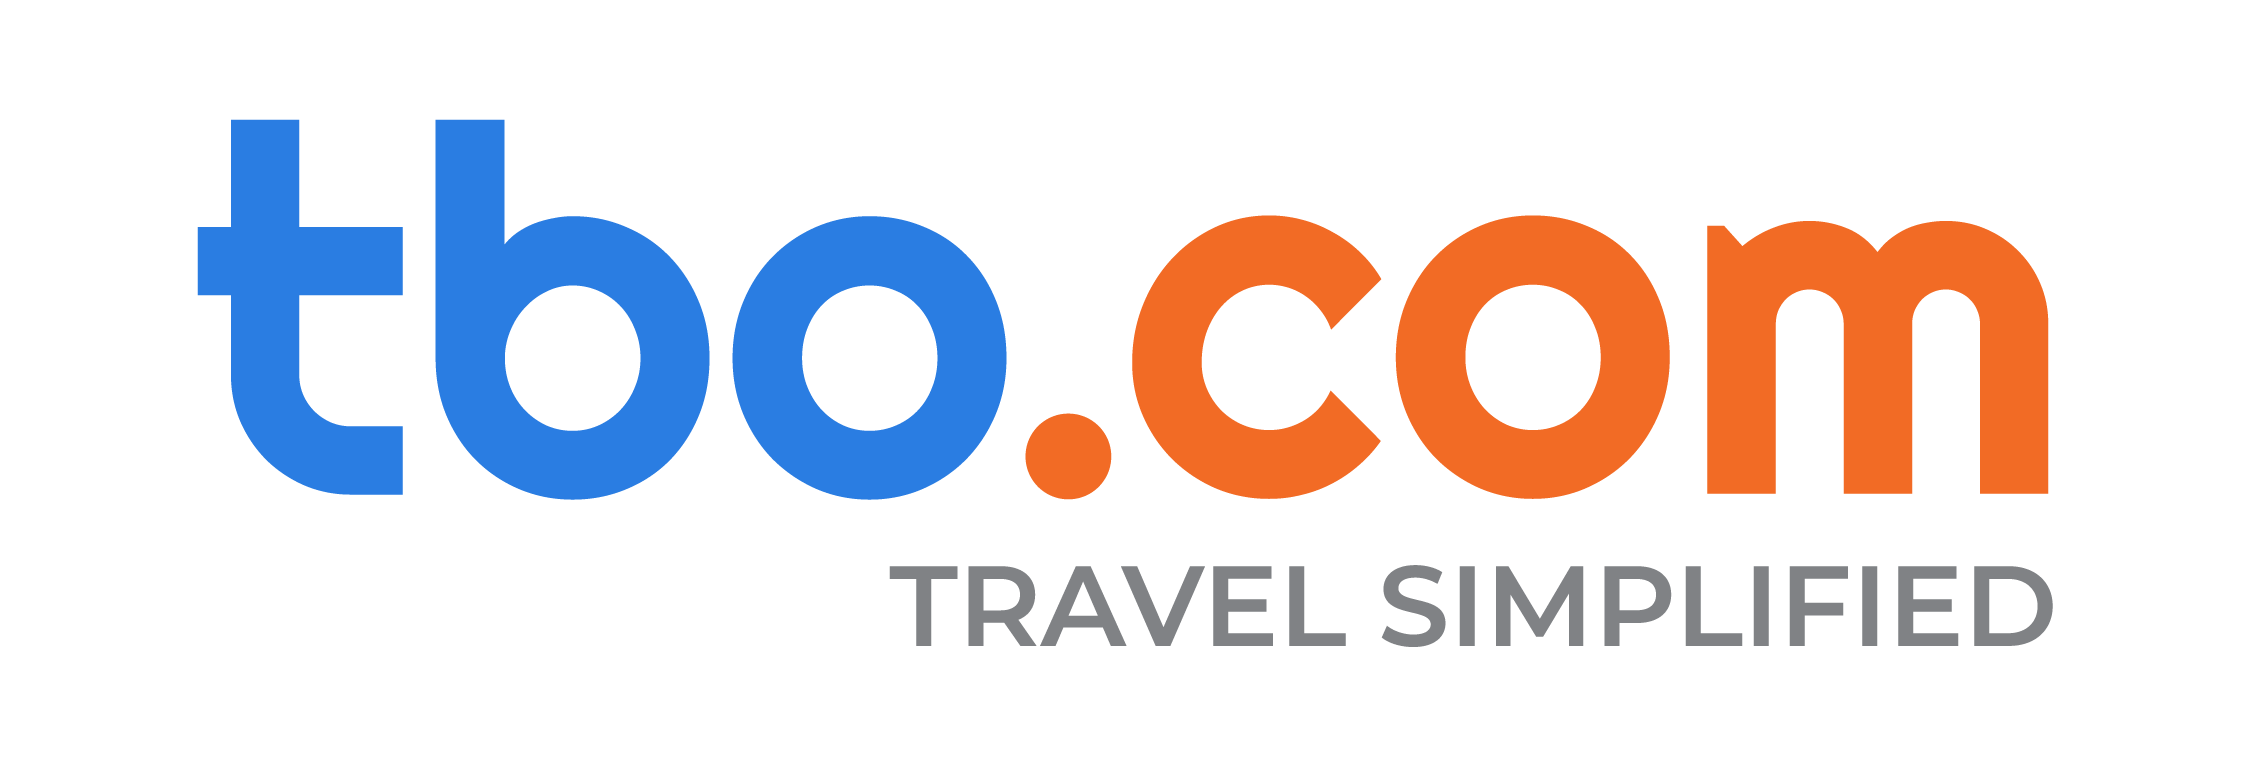 TBO.COM - Travel Simplified 